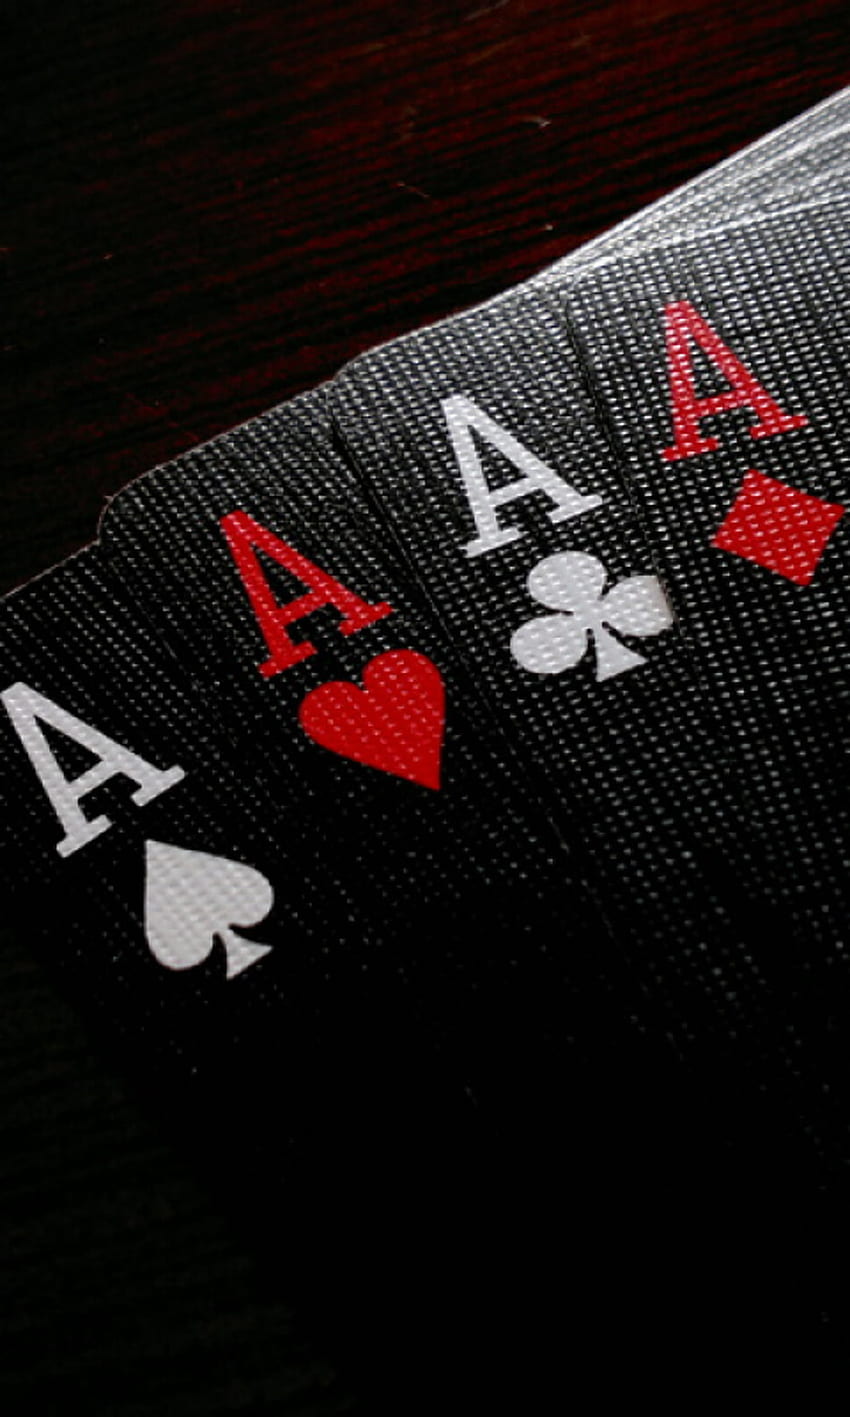 Pik-Ass-, Herz-, Kreuz- und Diamant-Spielkarten - Papel De Parede Celular Poker, Kartenspiel HD-Handy-Hintergrundbild